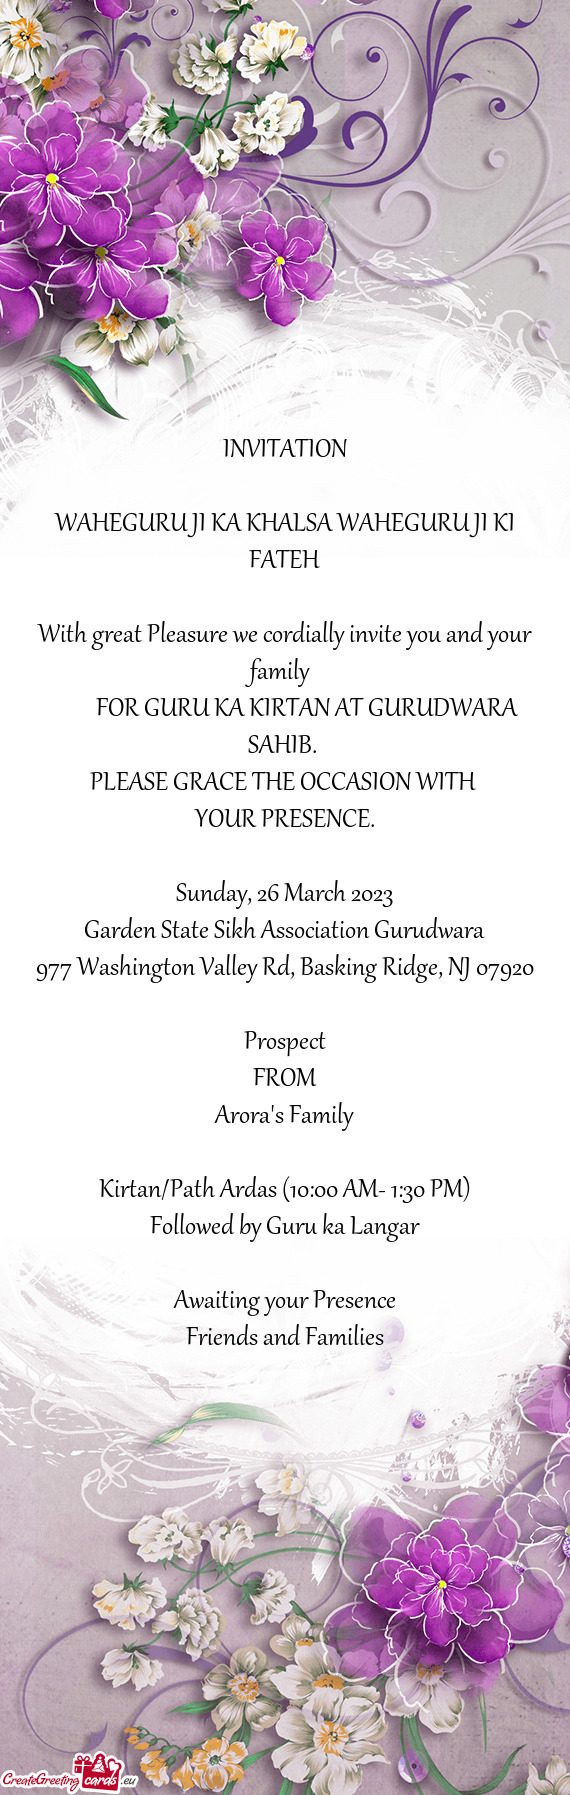 Garden State Sikh Association Gurudwara